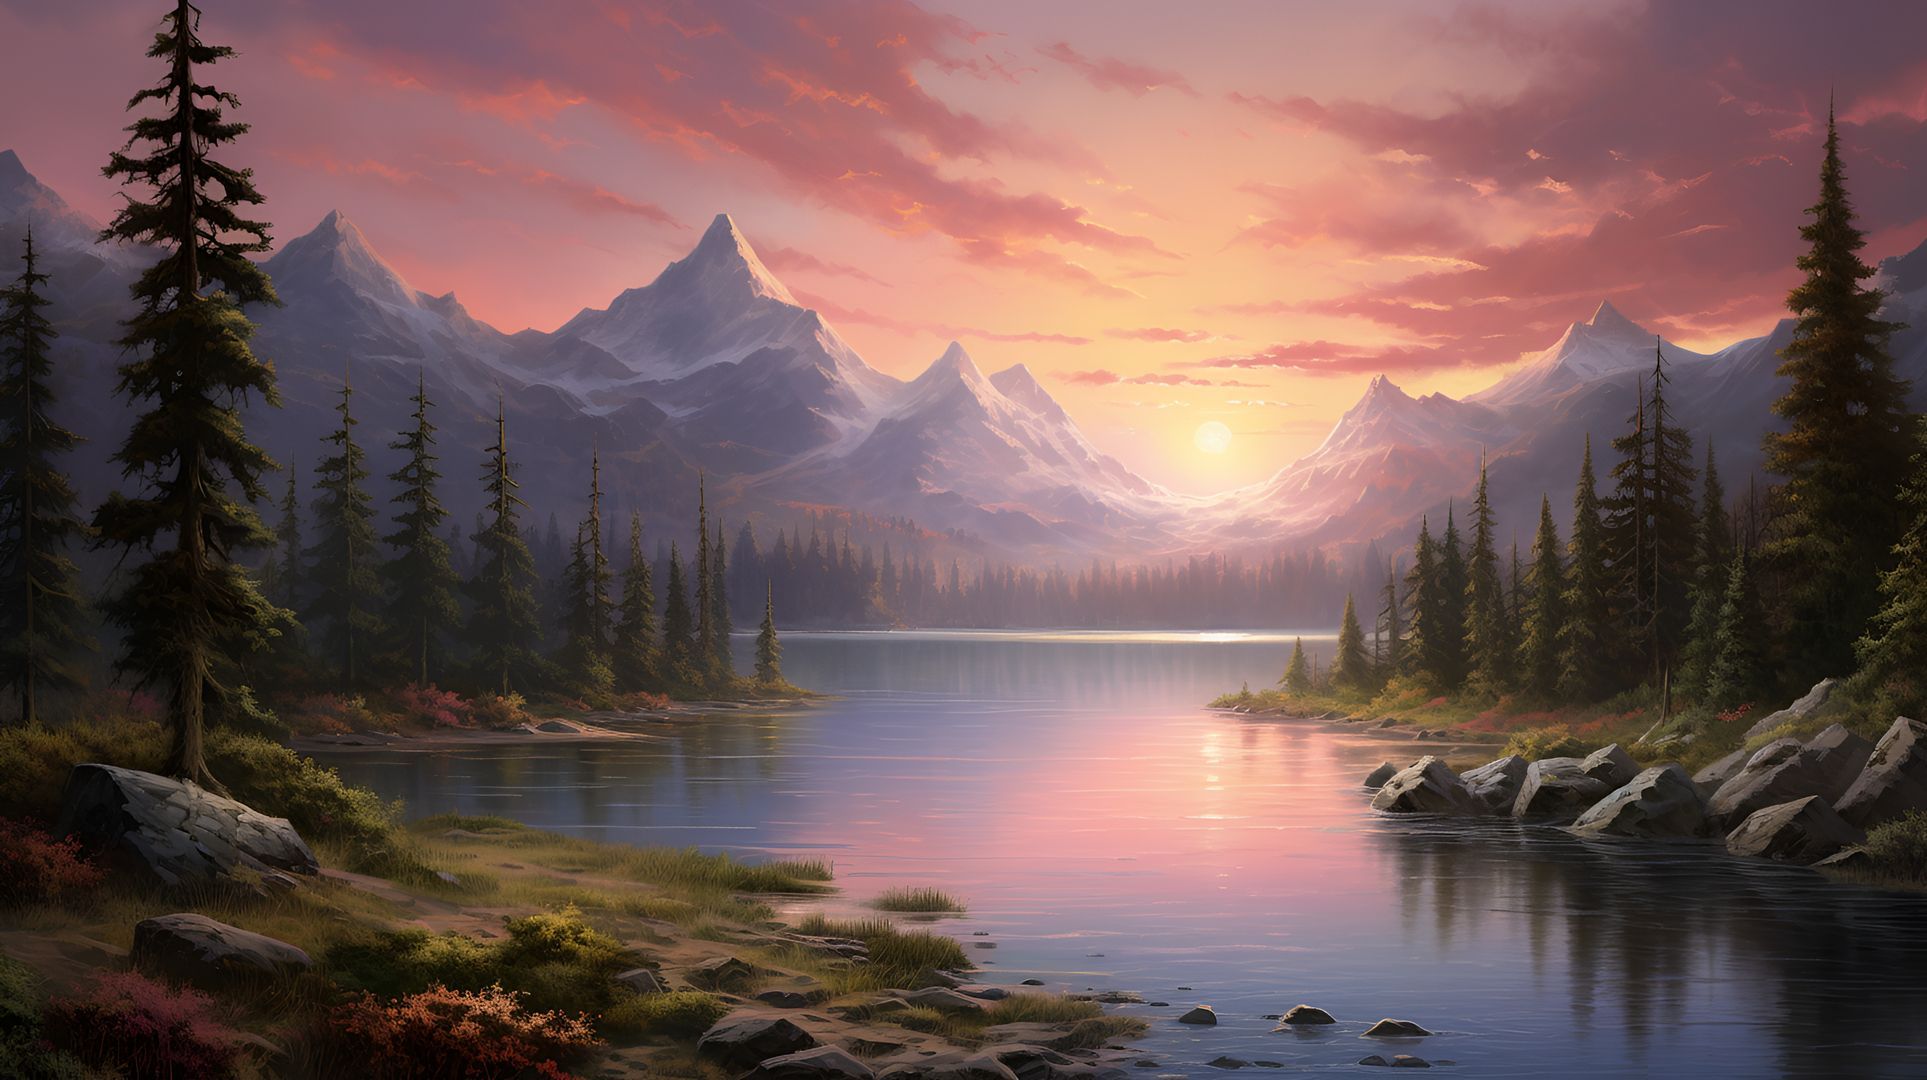 The Mountain Lake HD Digital Aesthetic Art Wallpaper, HD Artist 4K Wallpaper, Image and Background